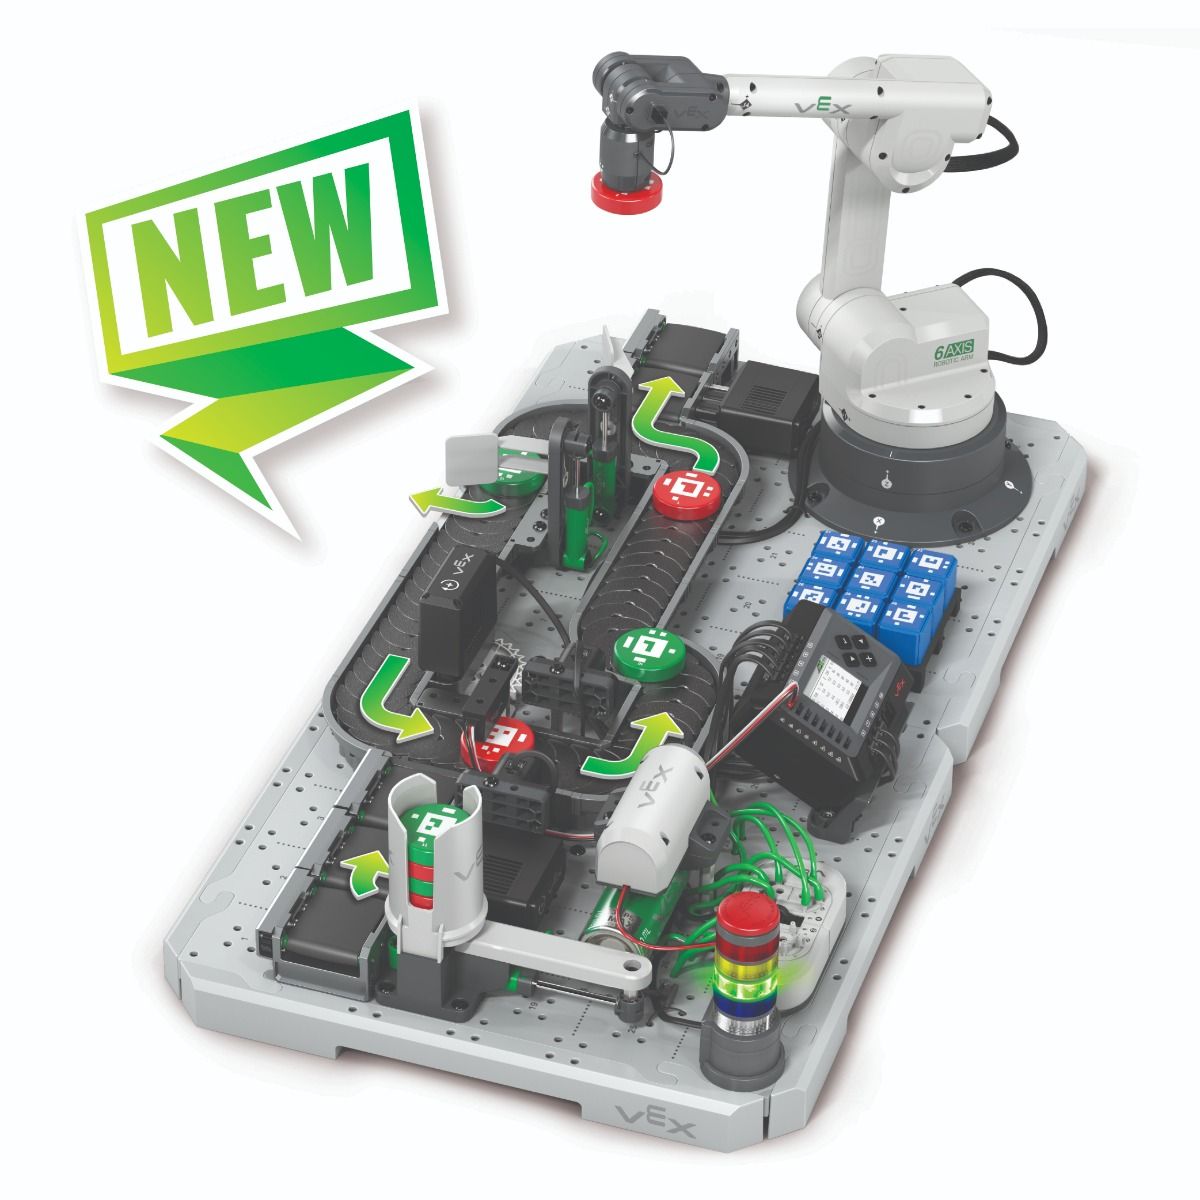 VEX V5 Classroom Starter Kit.  Educational robotics for secondary and high school students